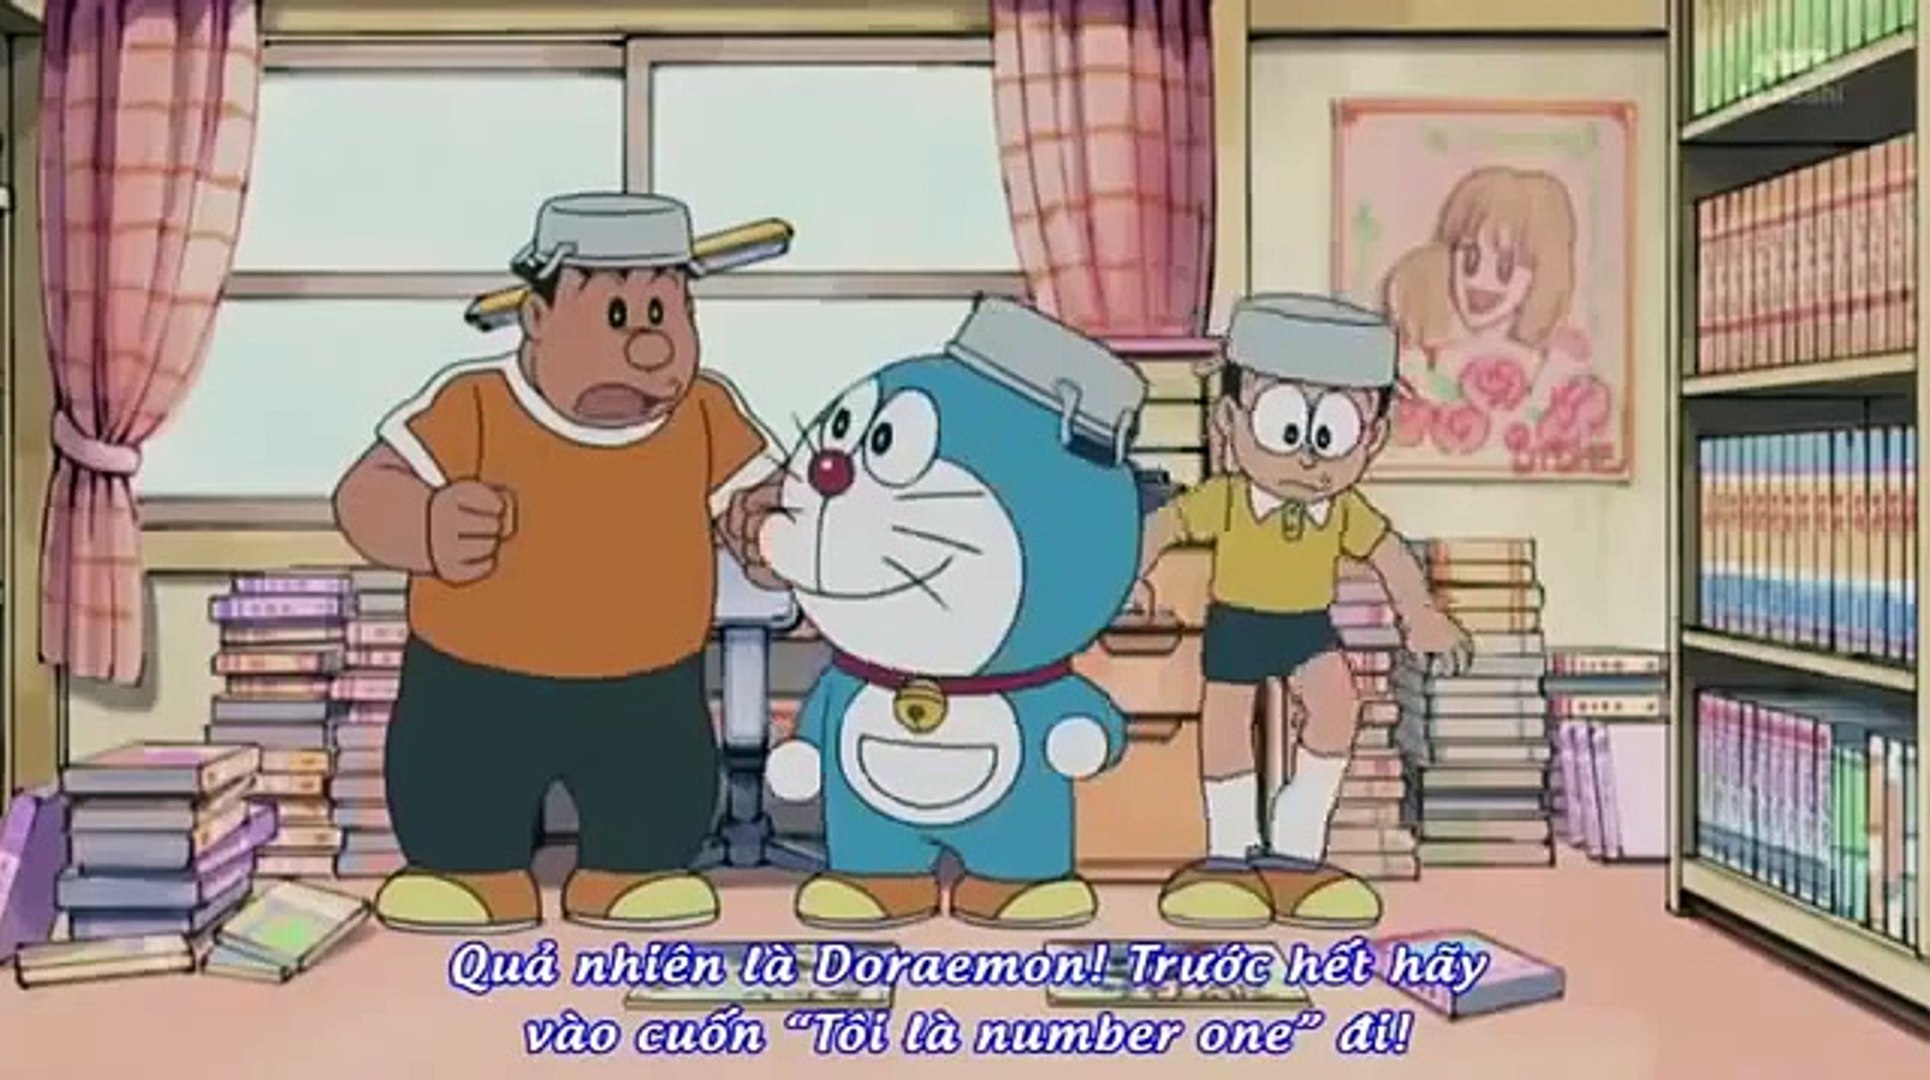 Doraemon Ep 242 ドラえもんアニメ 日本語 14 エピソード 242 Video Dailymotion